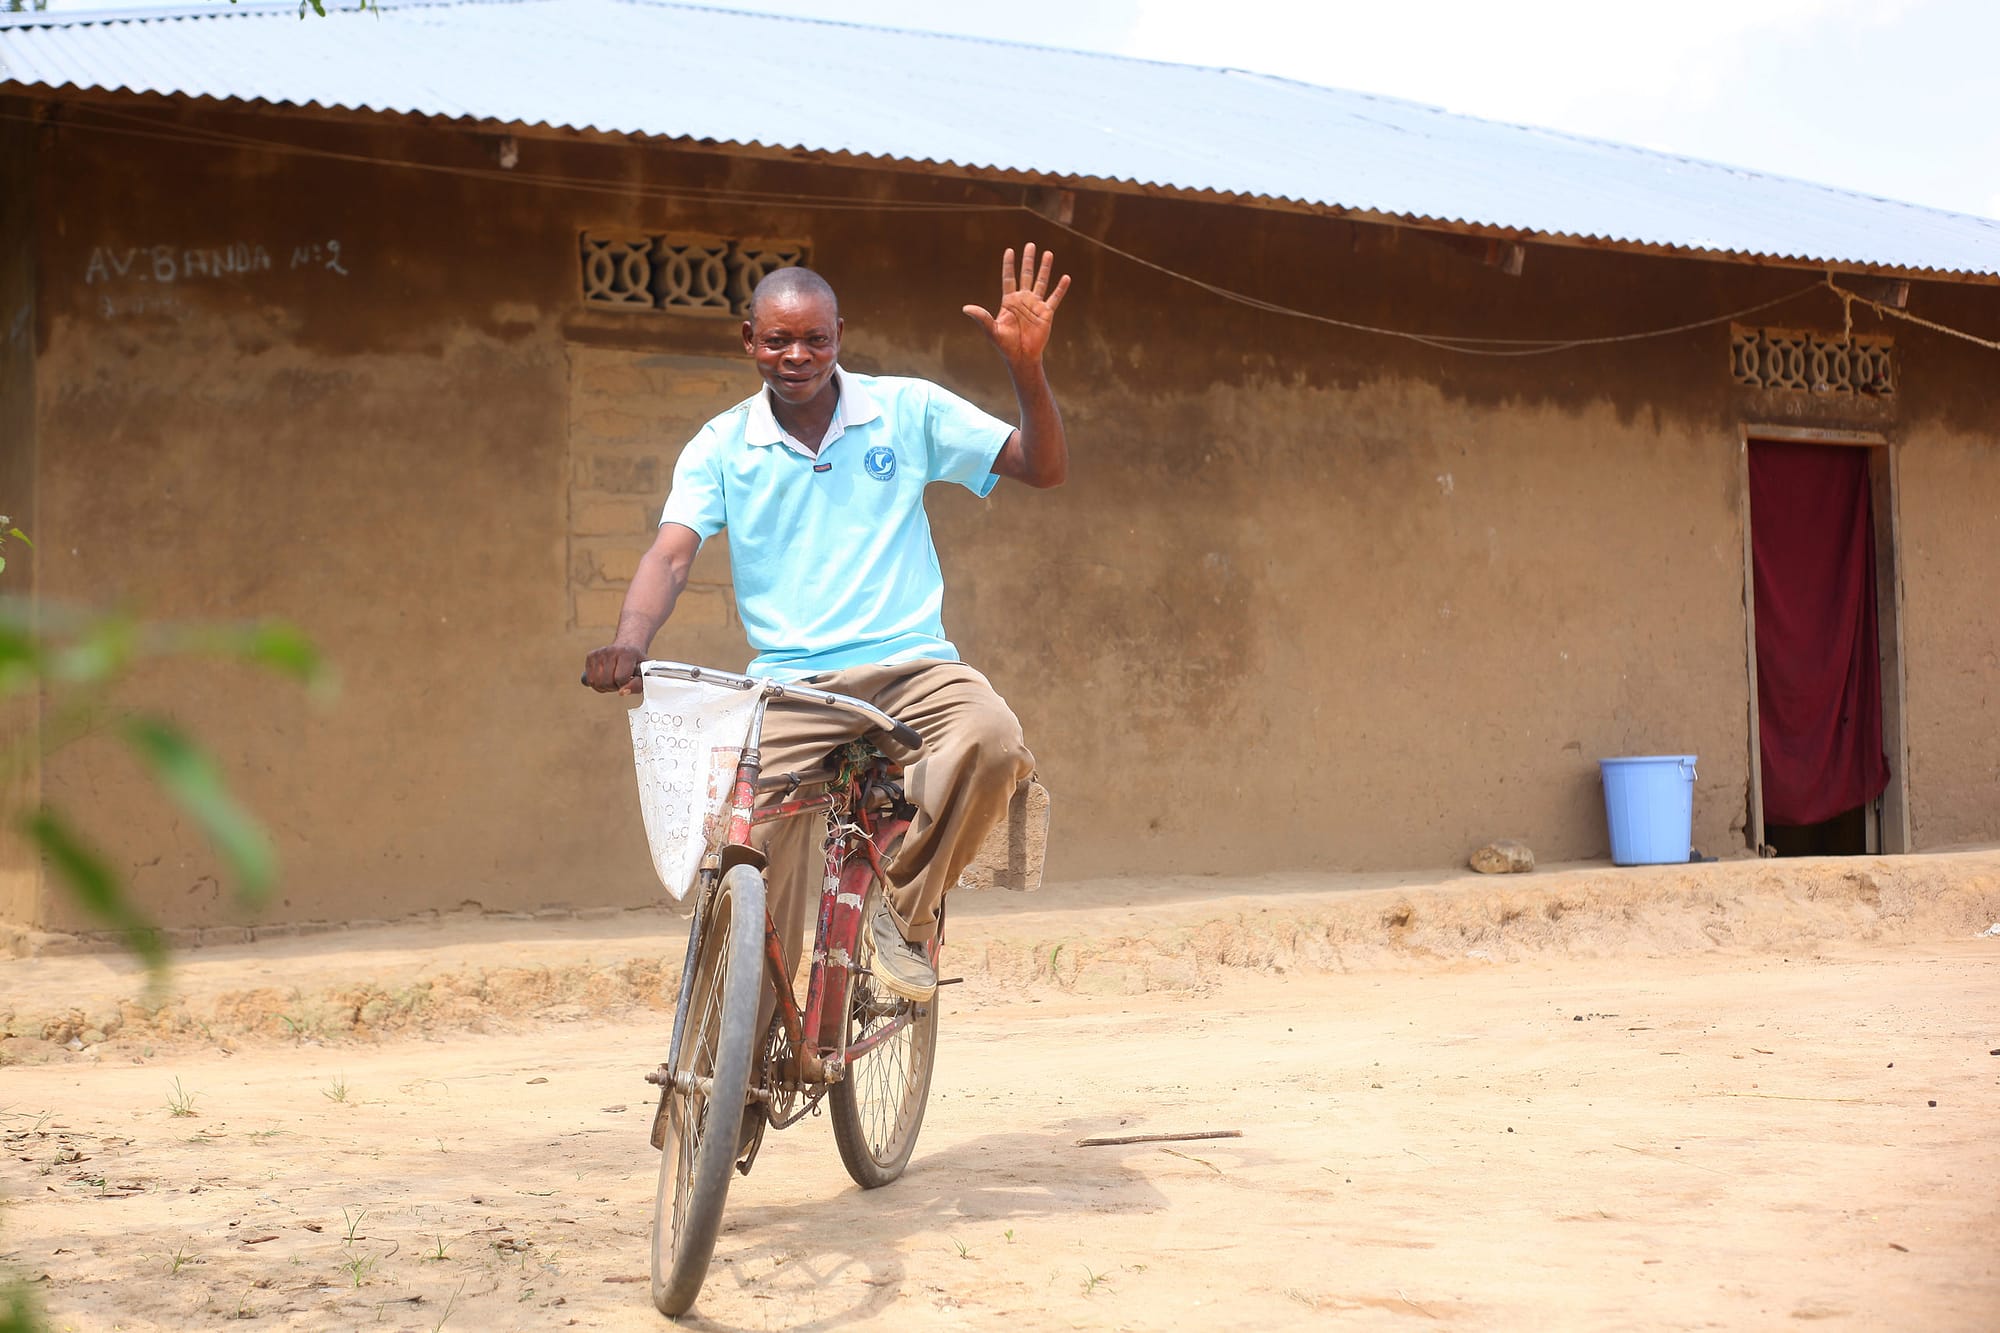 Man riding a bike in rural village